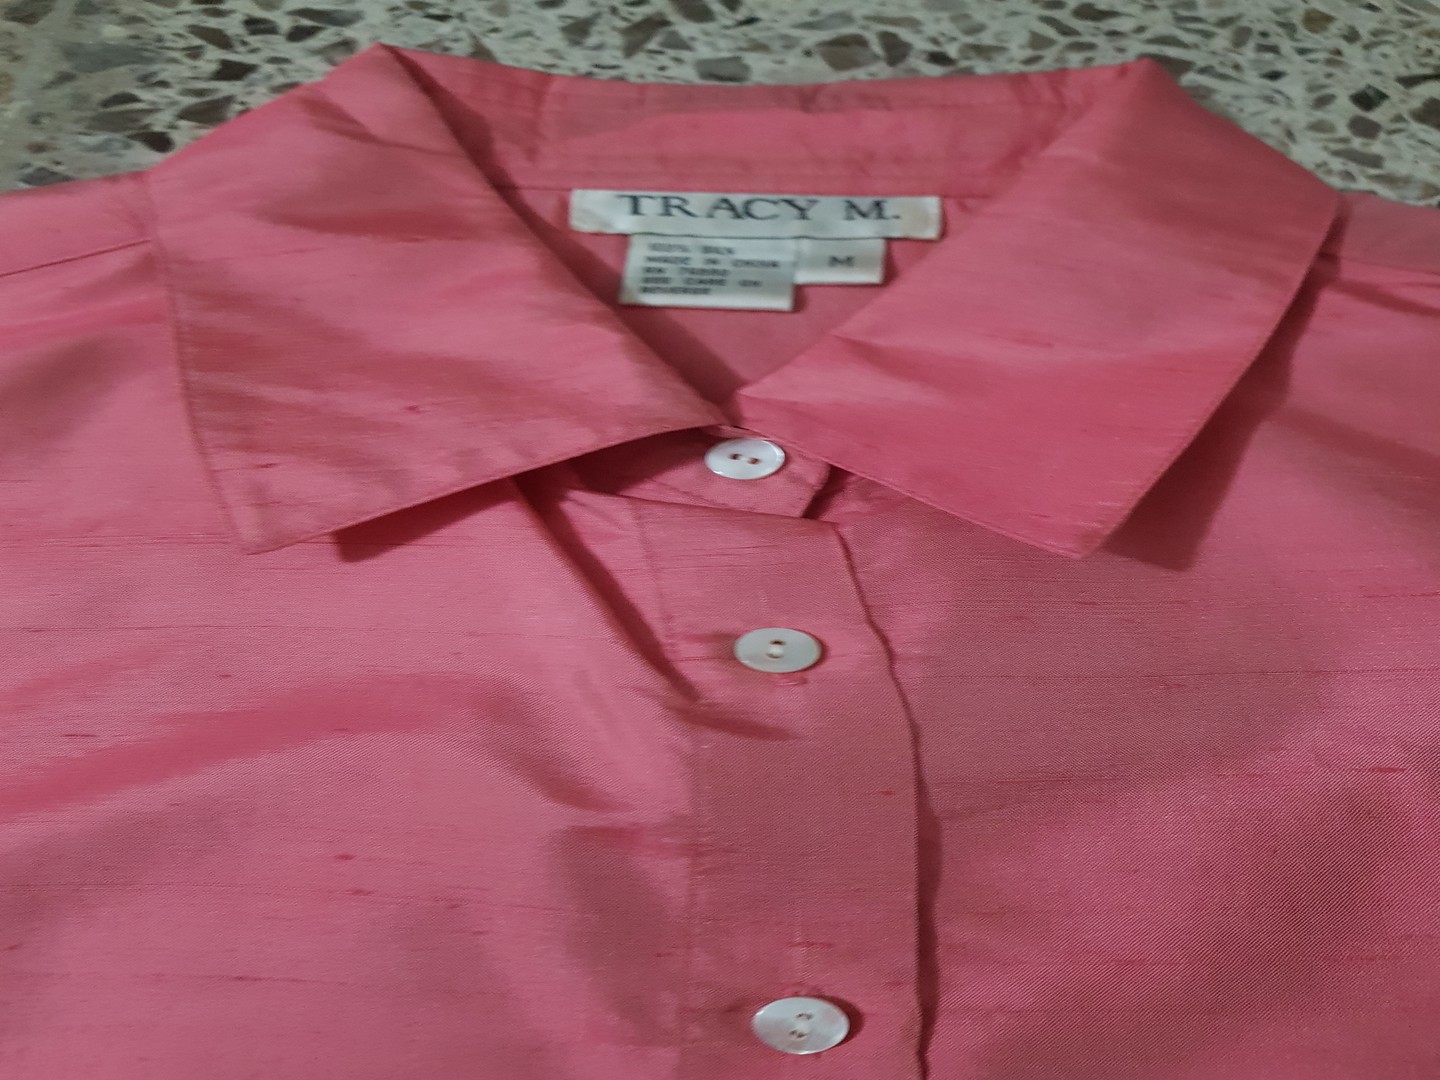 Elegante blusa camisera de seda pura, tamaño M, marca Tracy M. 2